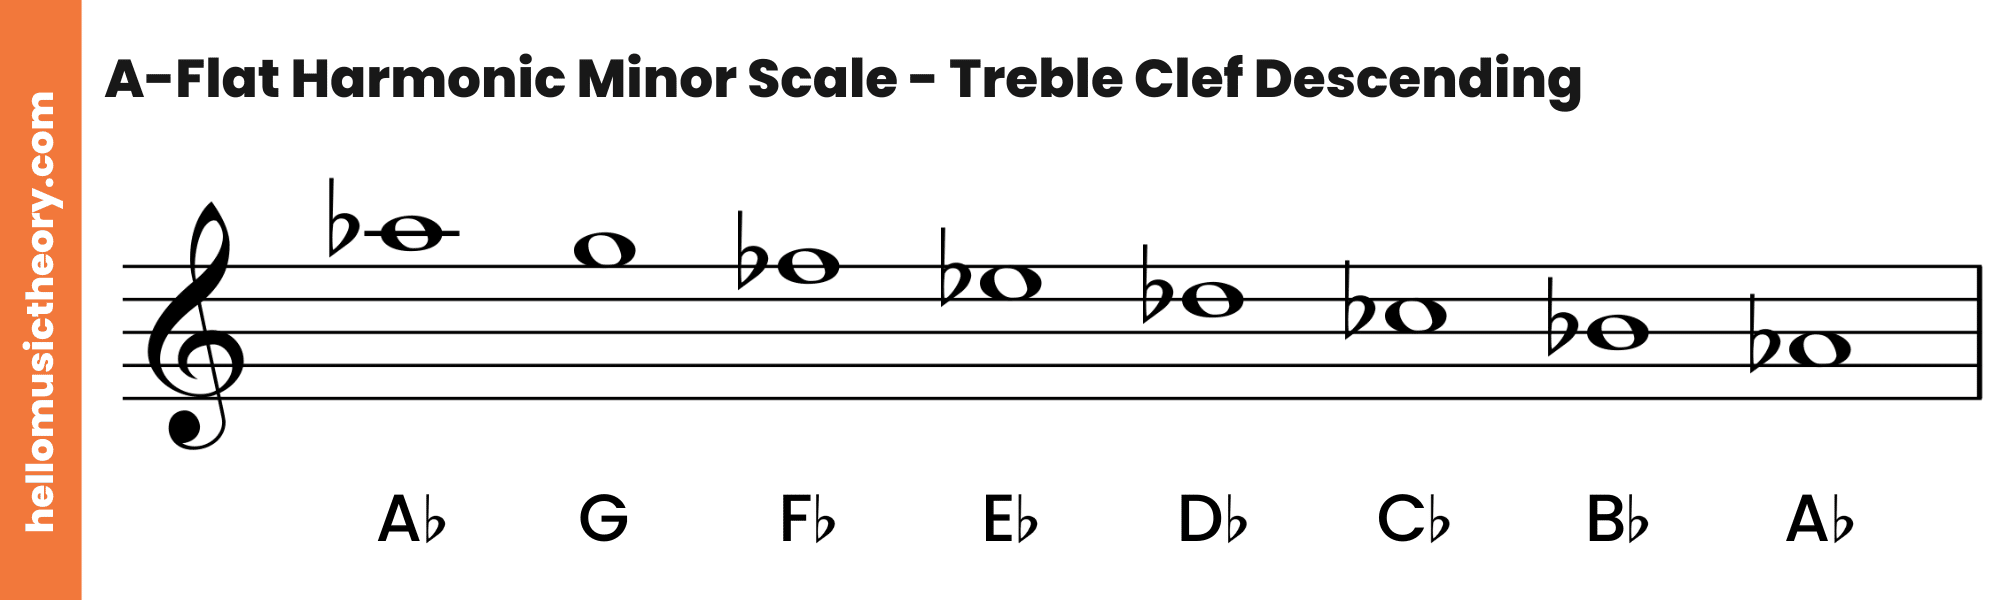 A-Flat Harmonic Minor Scale Treble Clef Descending